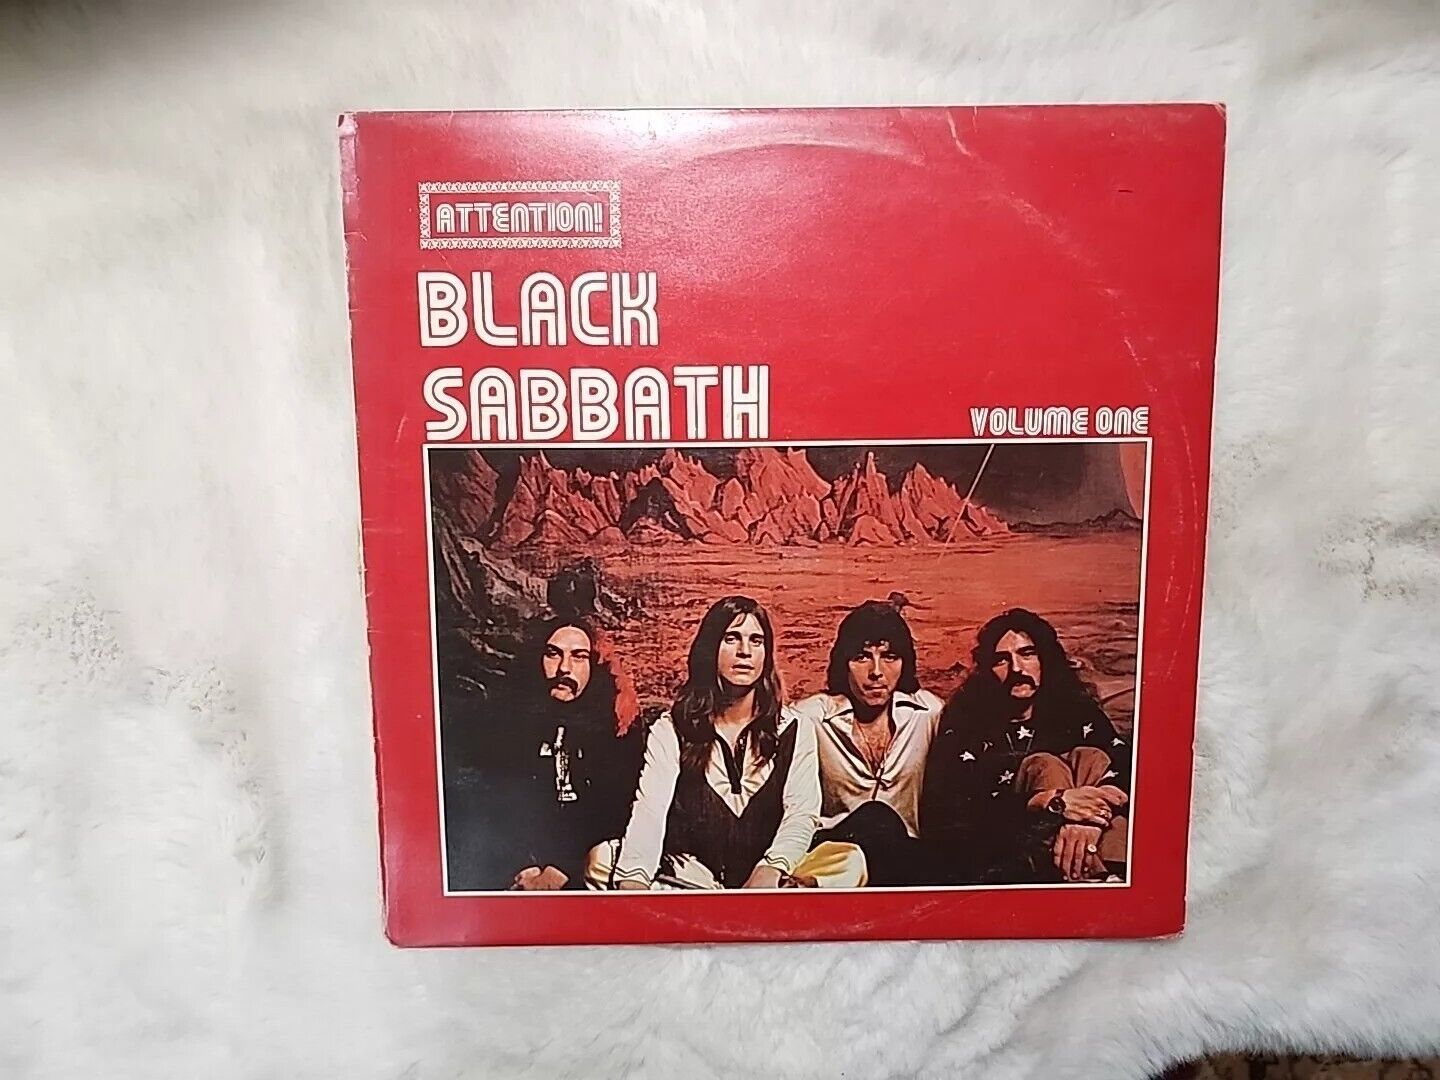 Black Sabbath Attention Black Sabbath Volume One Vinyl 1975 1ST OG WWA100 UK LP